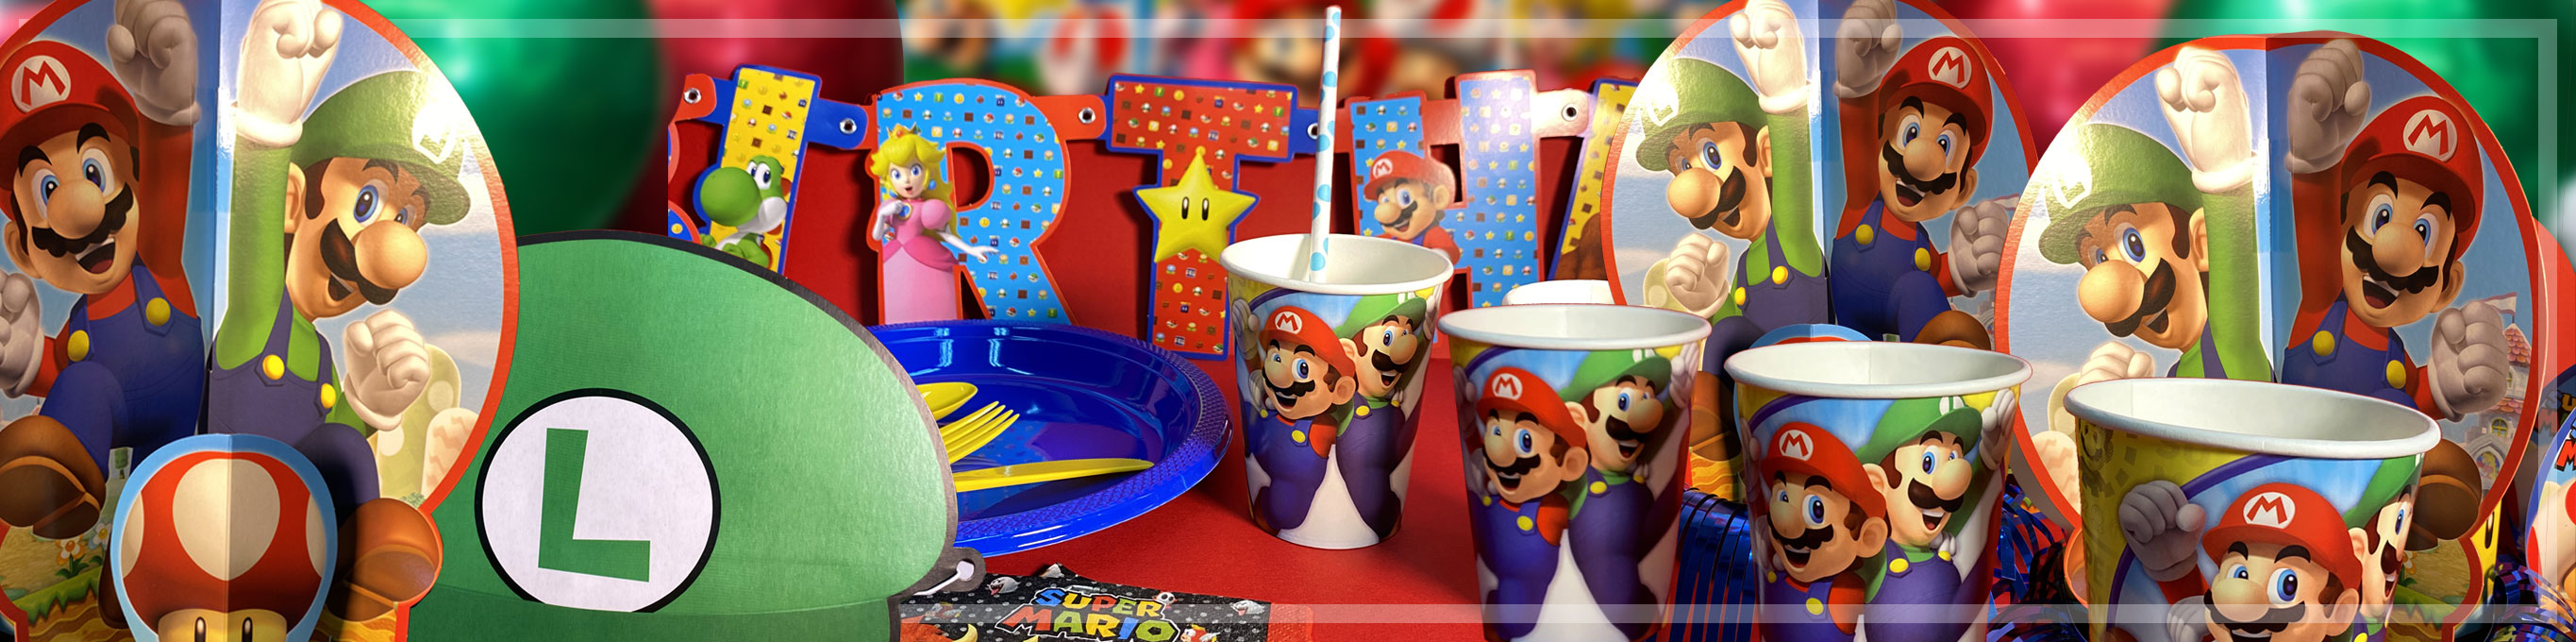 Super Mario Theme Party